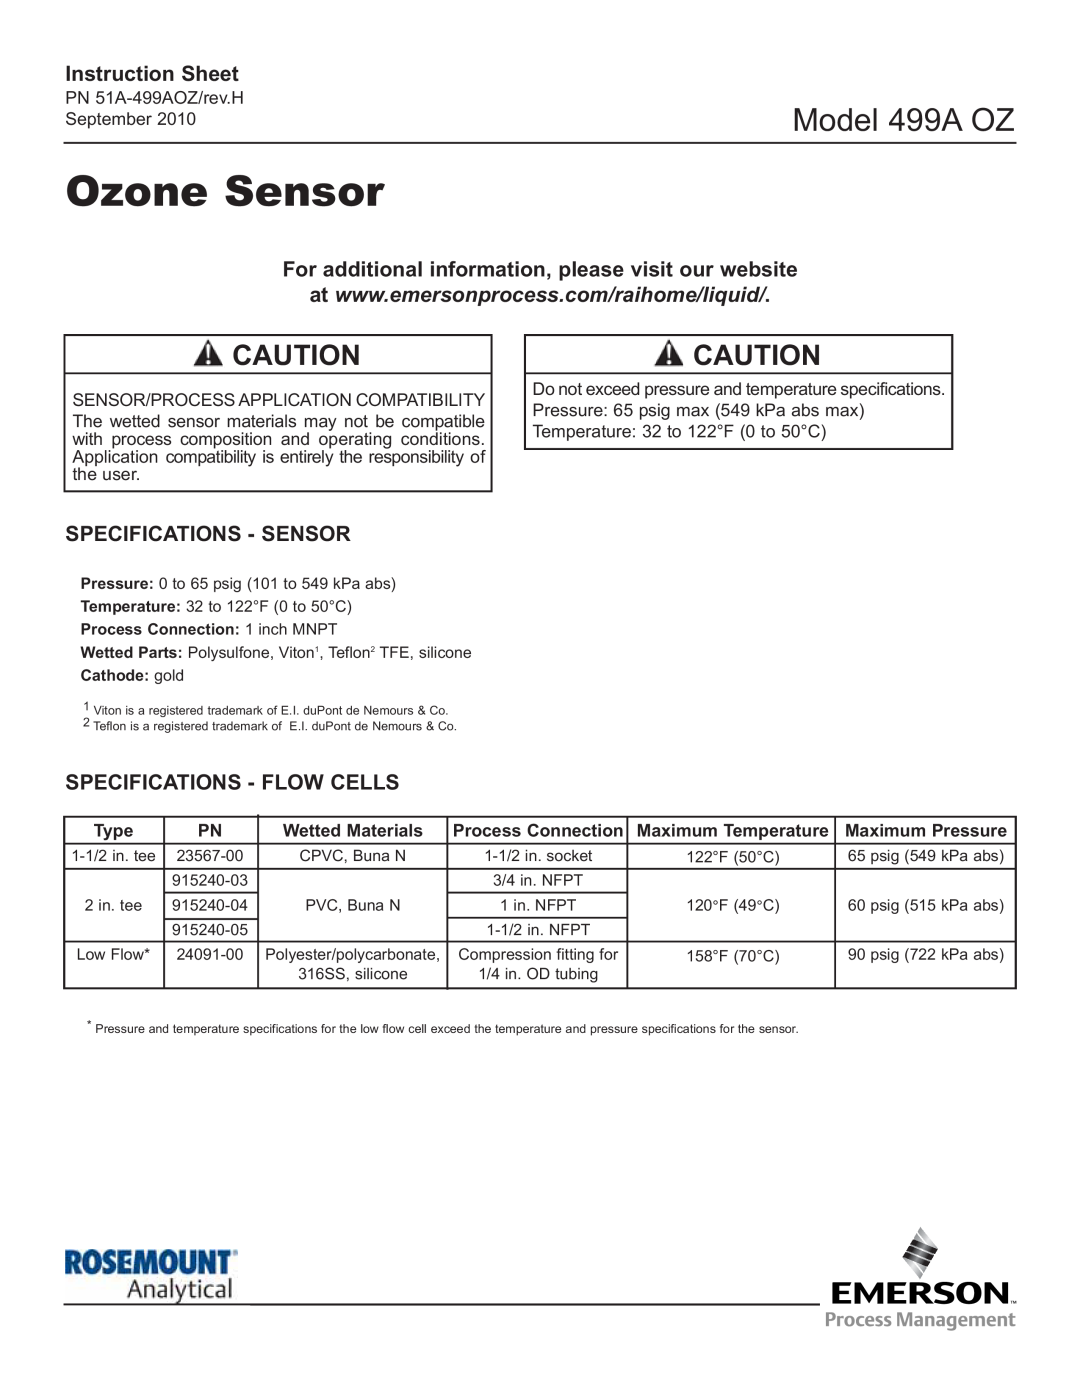 Emerson 499A OZ specifications Instruction Sheet, Specifications - Sensor, Specifications - Flow Cells, Type, Ozone Sensor 